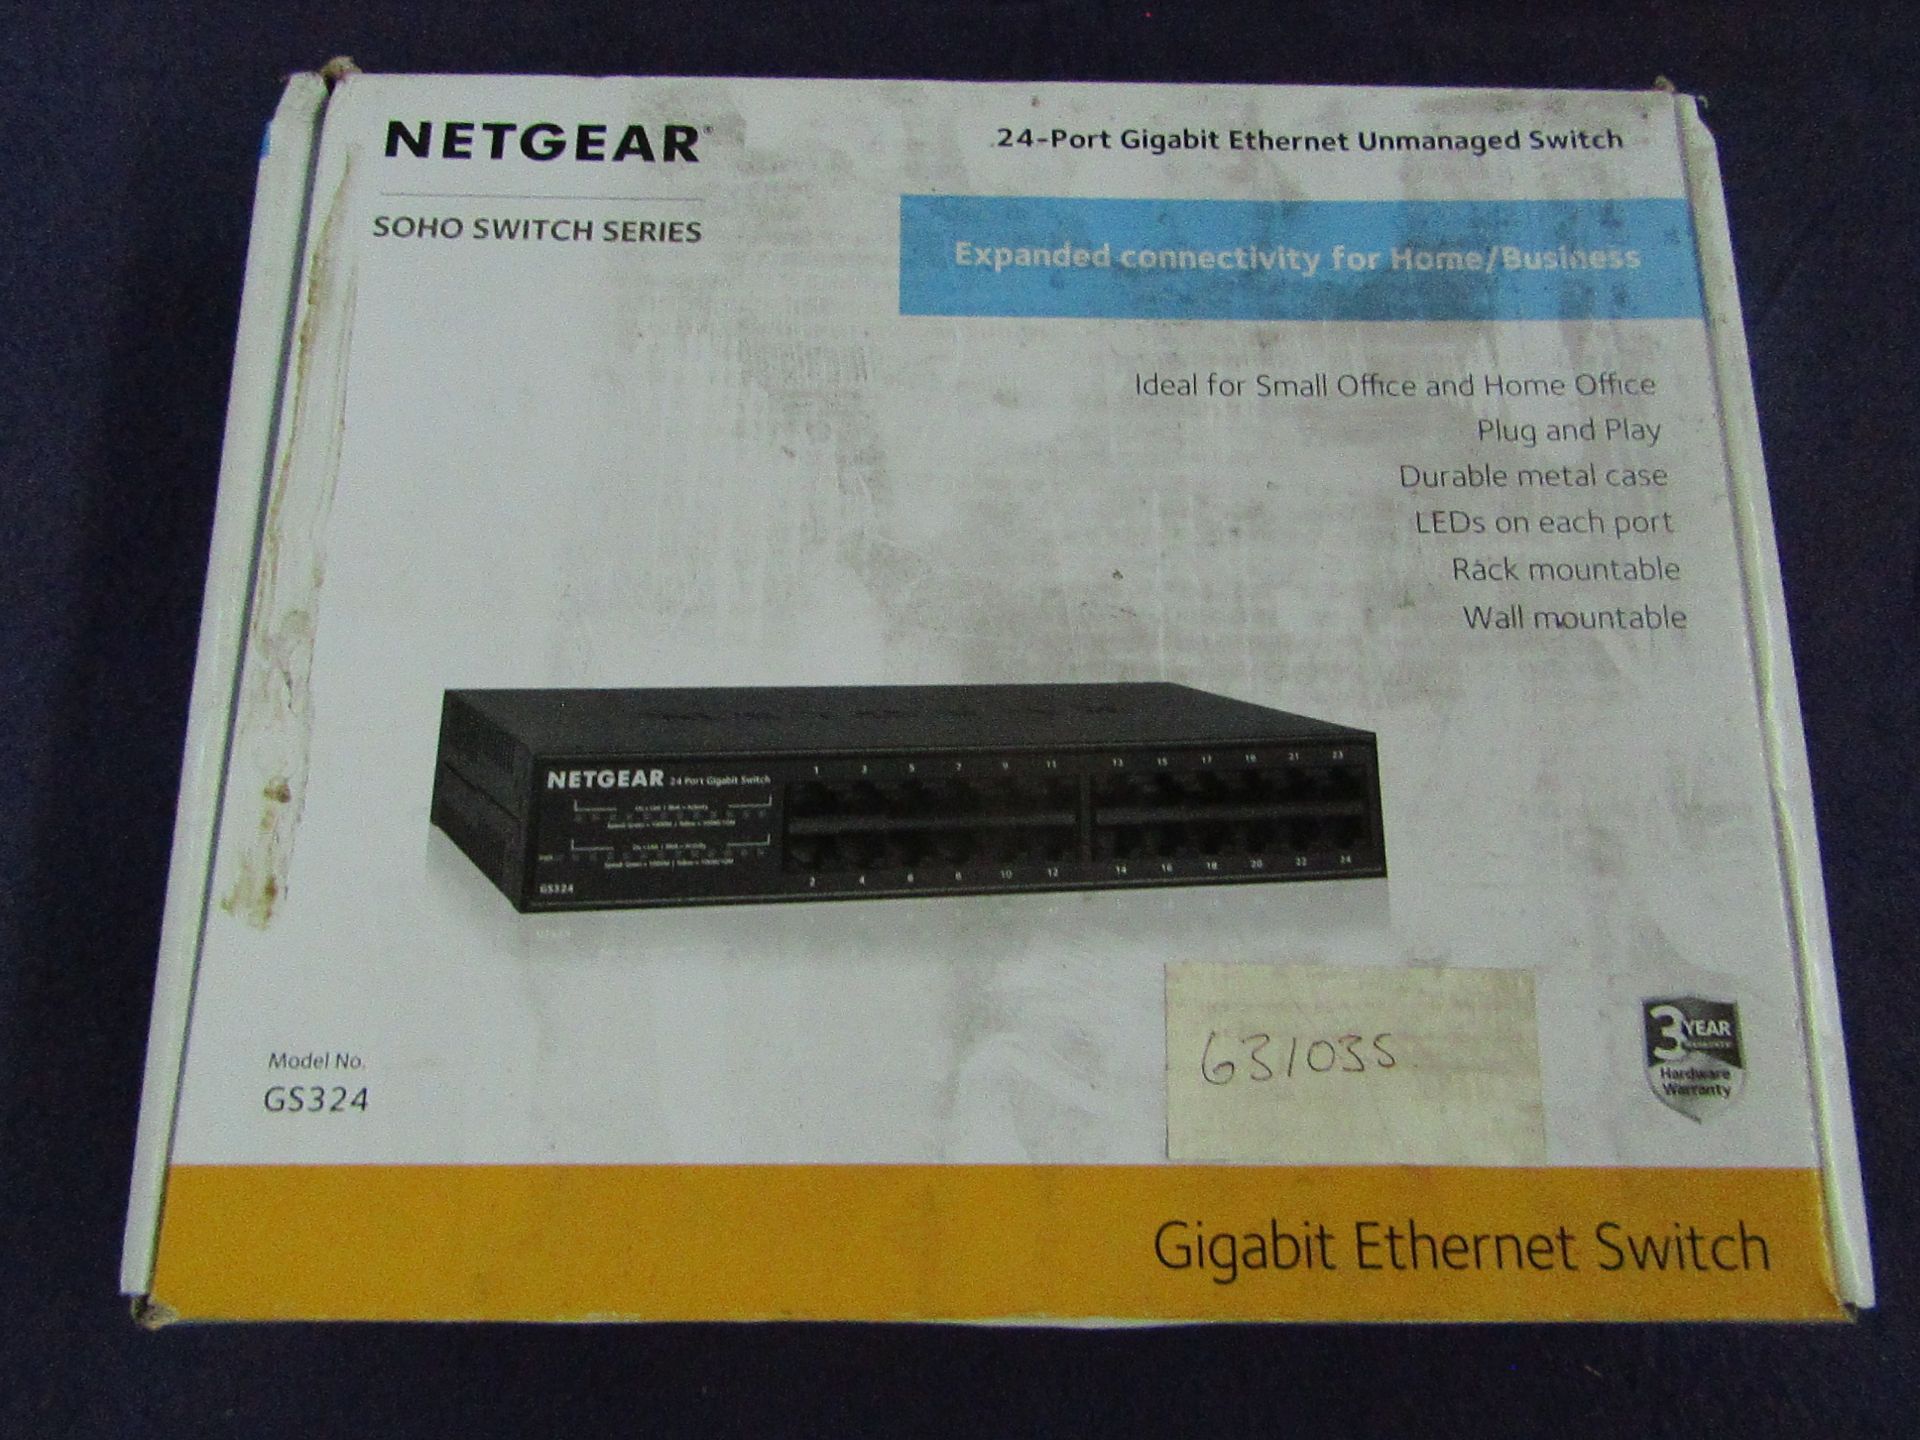 Netgear - Soho Switch Series 24-Port Gigabit Ethernet Unmanaged Switch - Unchecked & Boxed.